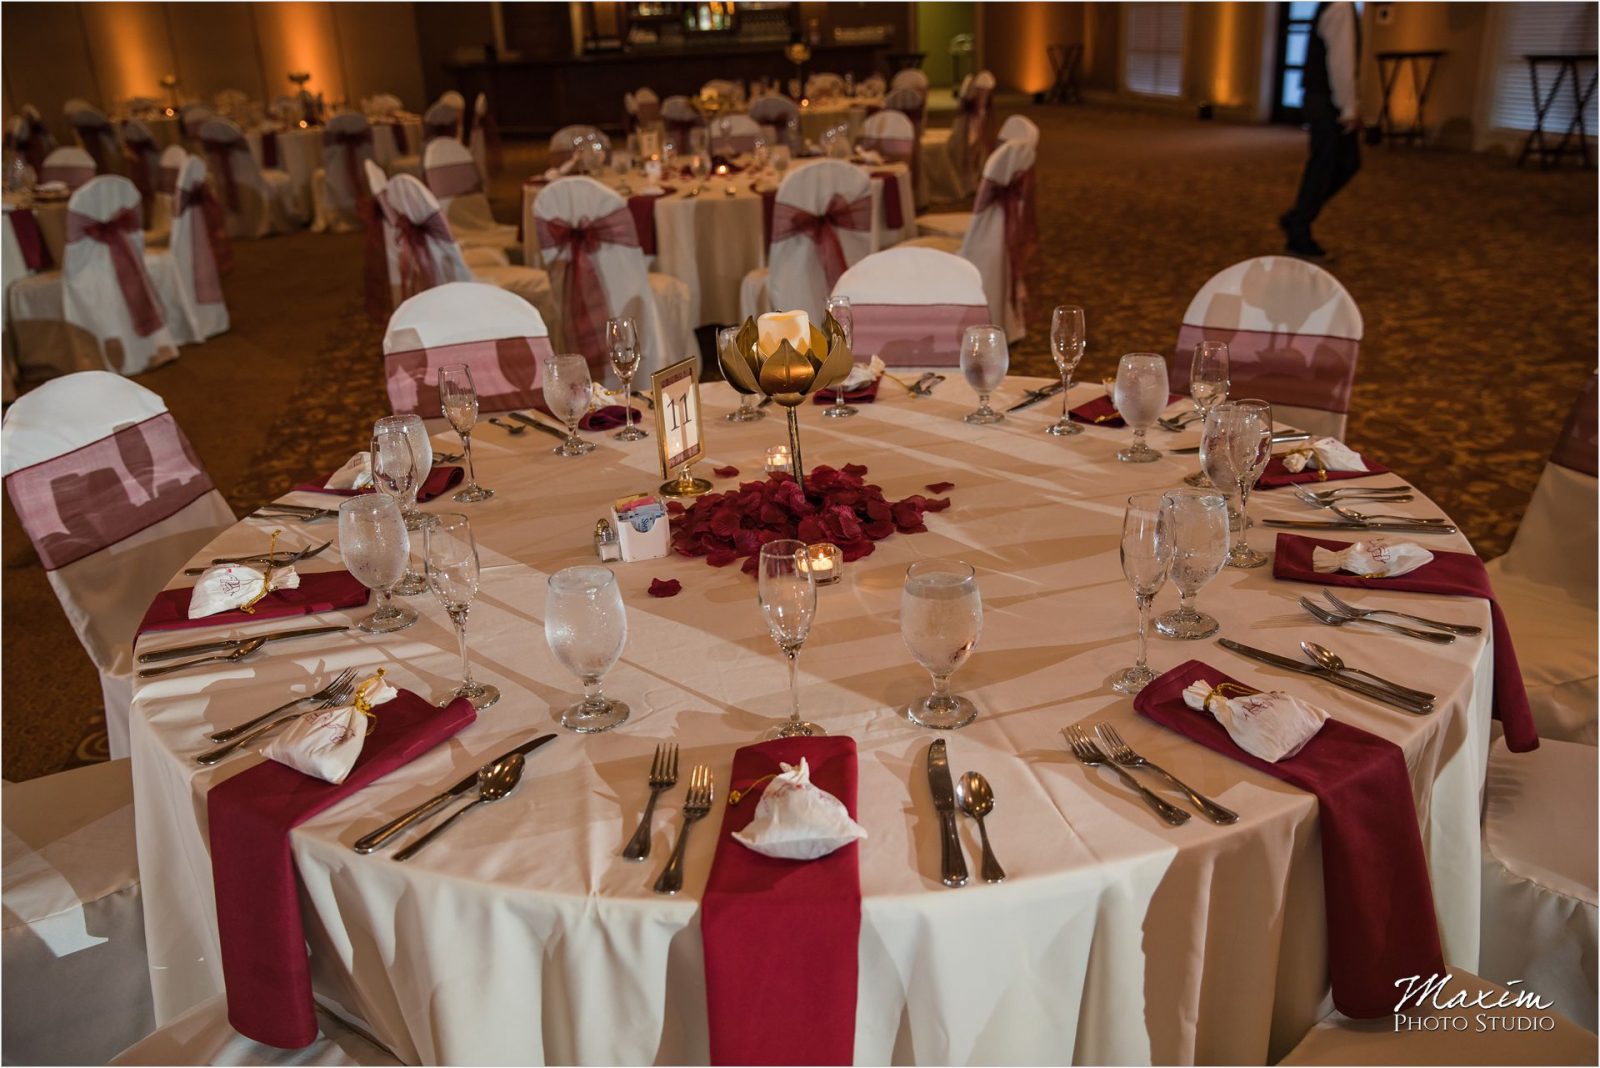 Savannah Center Cincinnati Indian Wedding Reception Decor